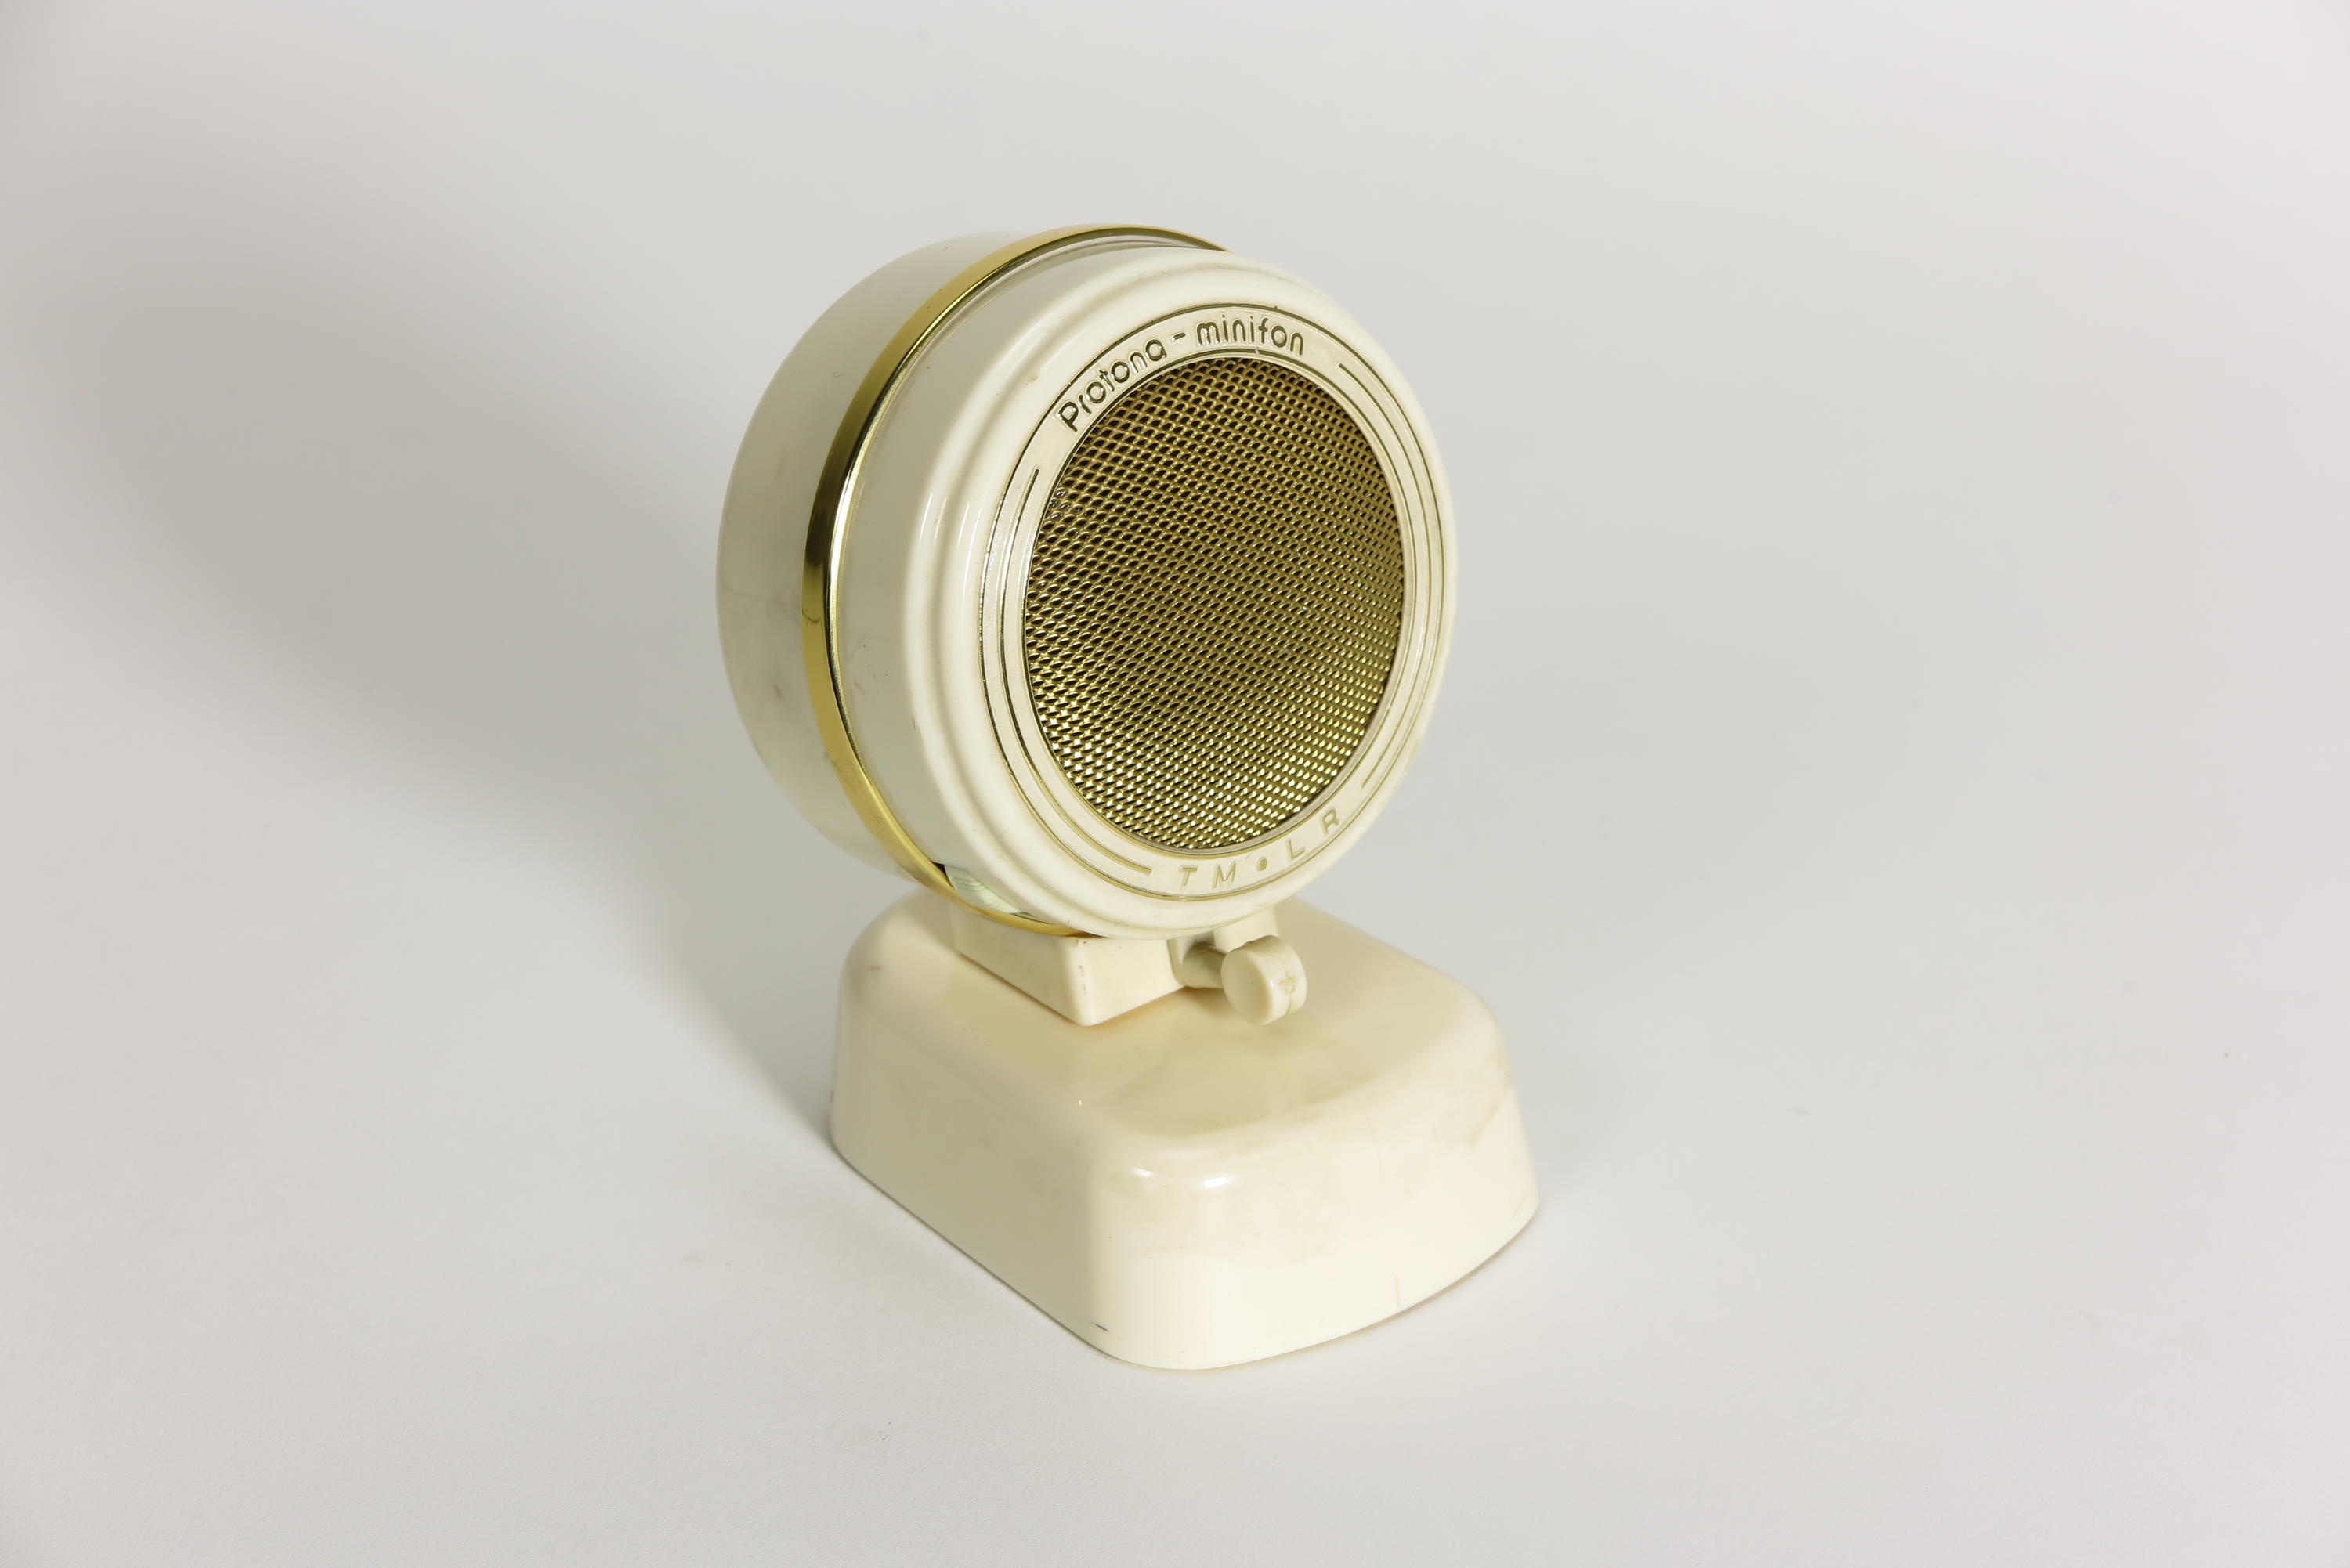 Lautsprecher Protona Minifon TM LR (Deutsches Technikmuseum CC BY)